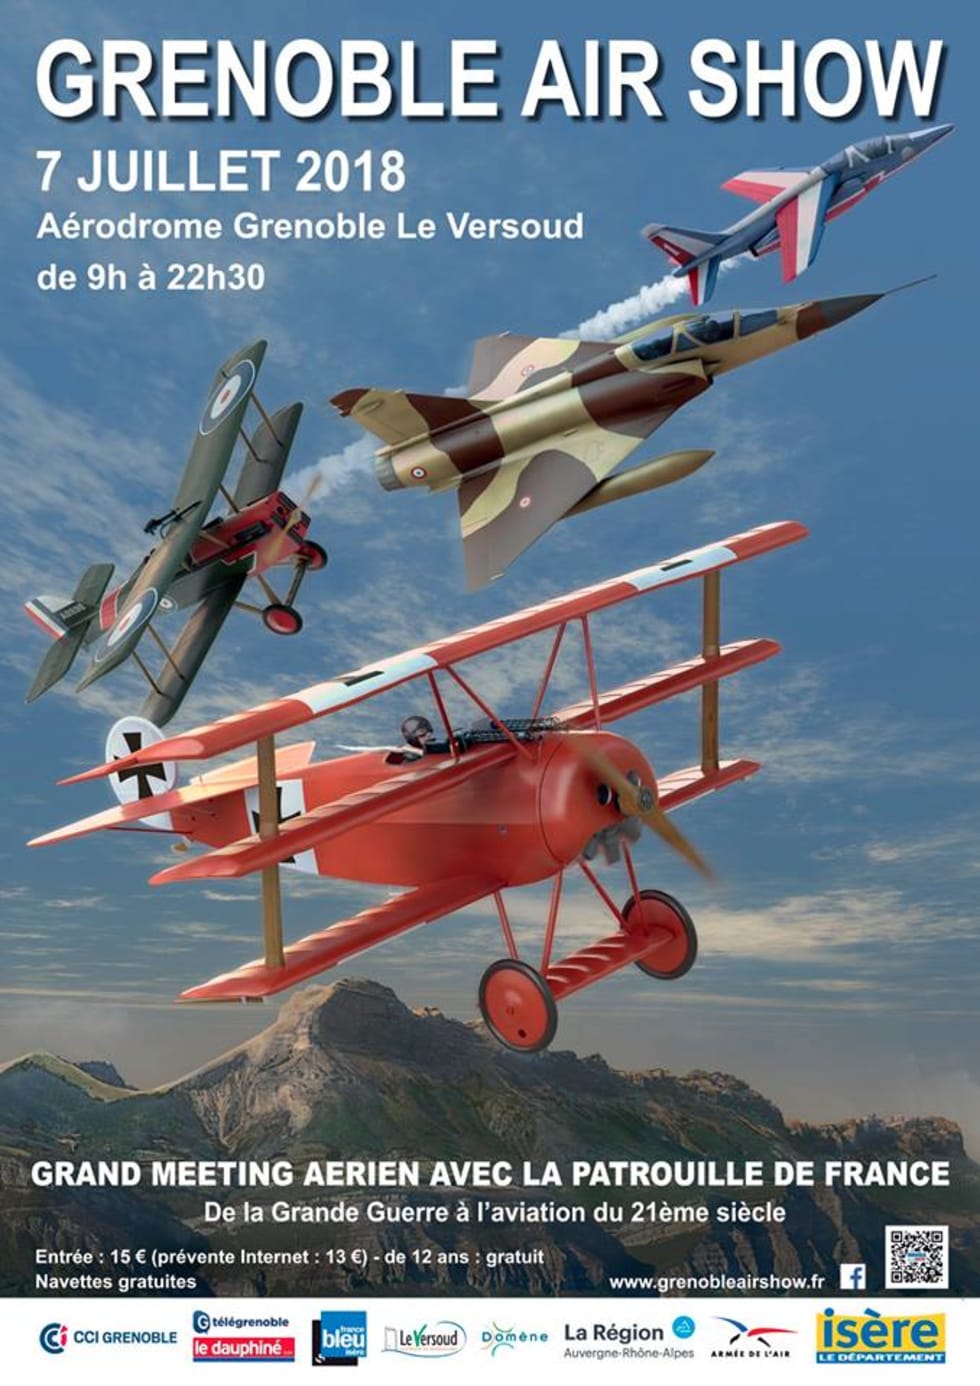 Grenoble Air Show